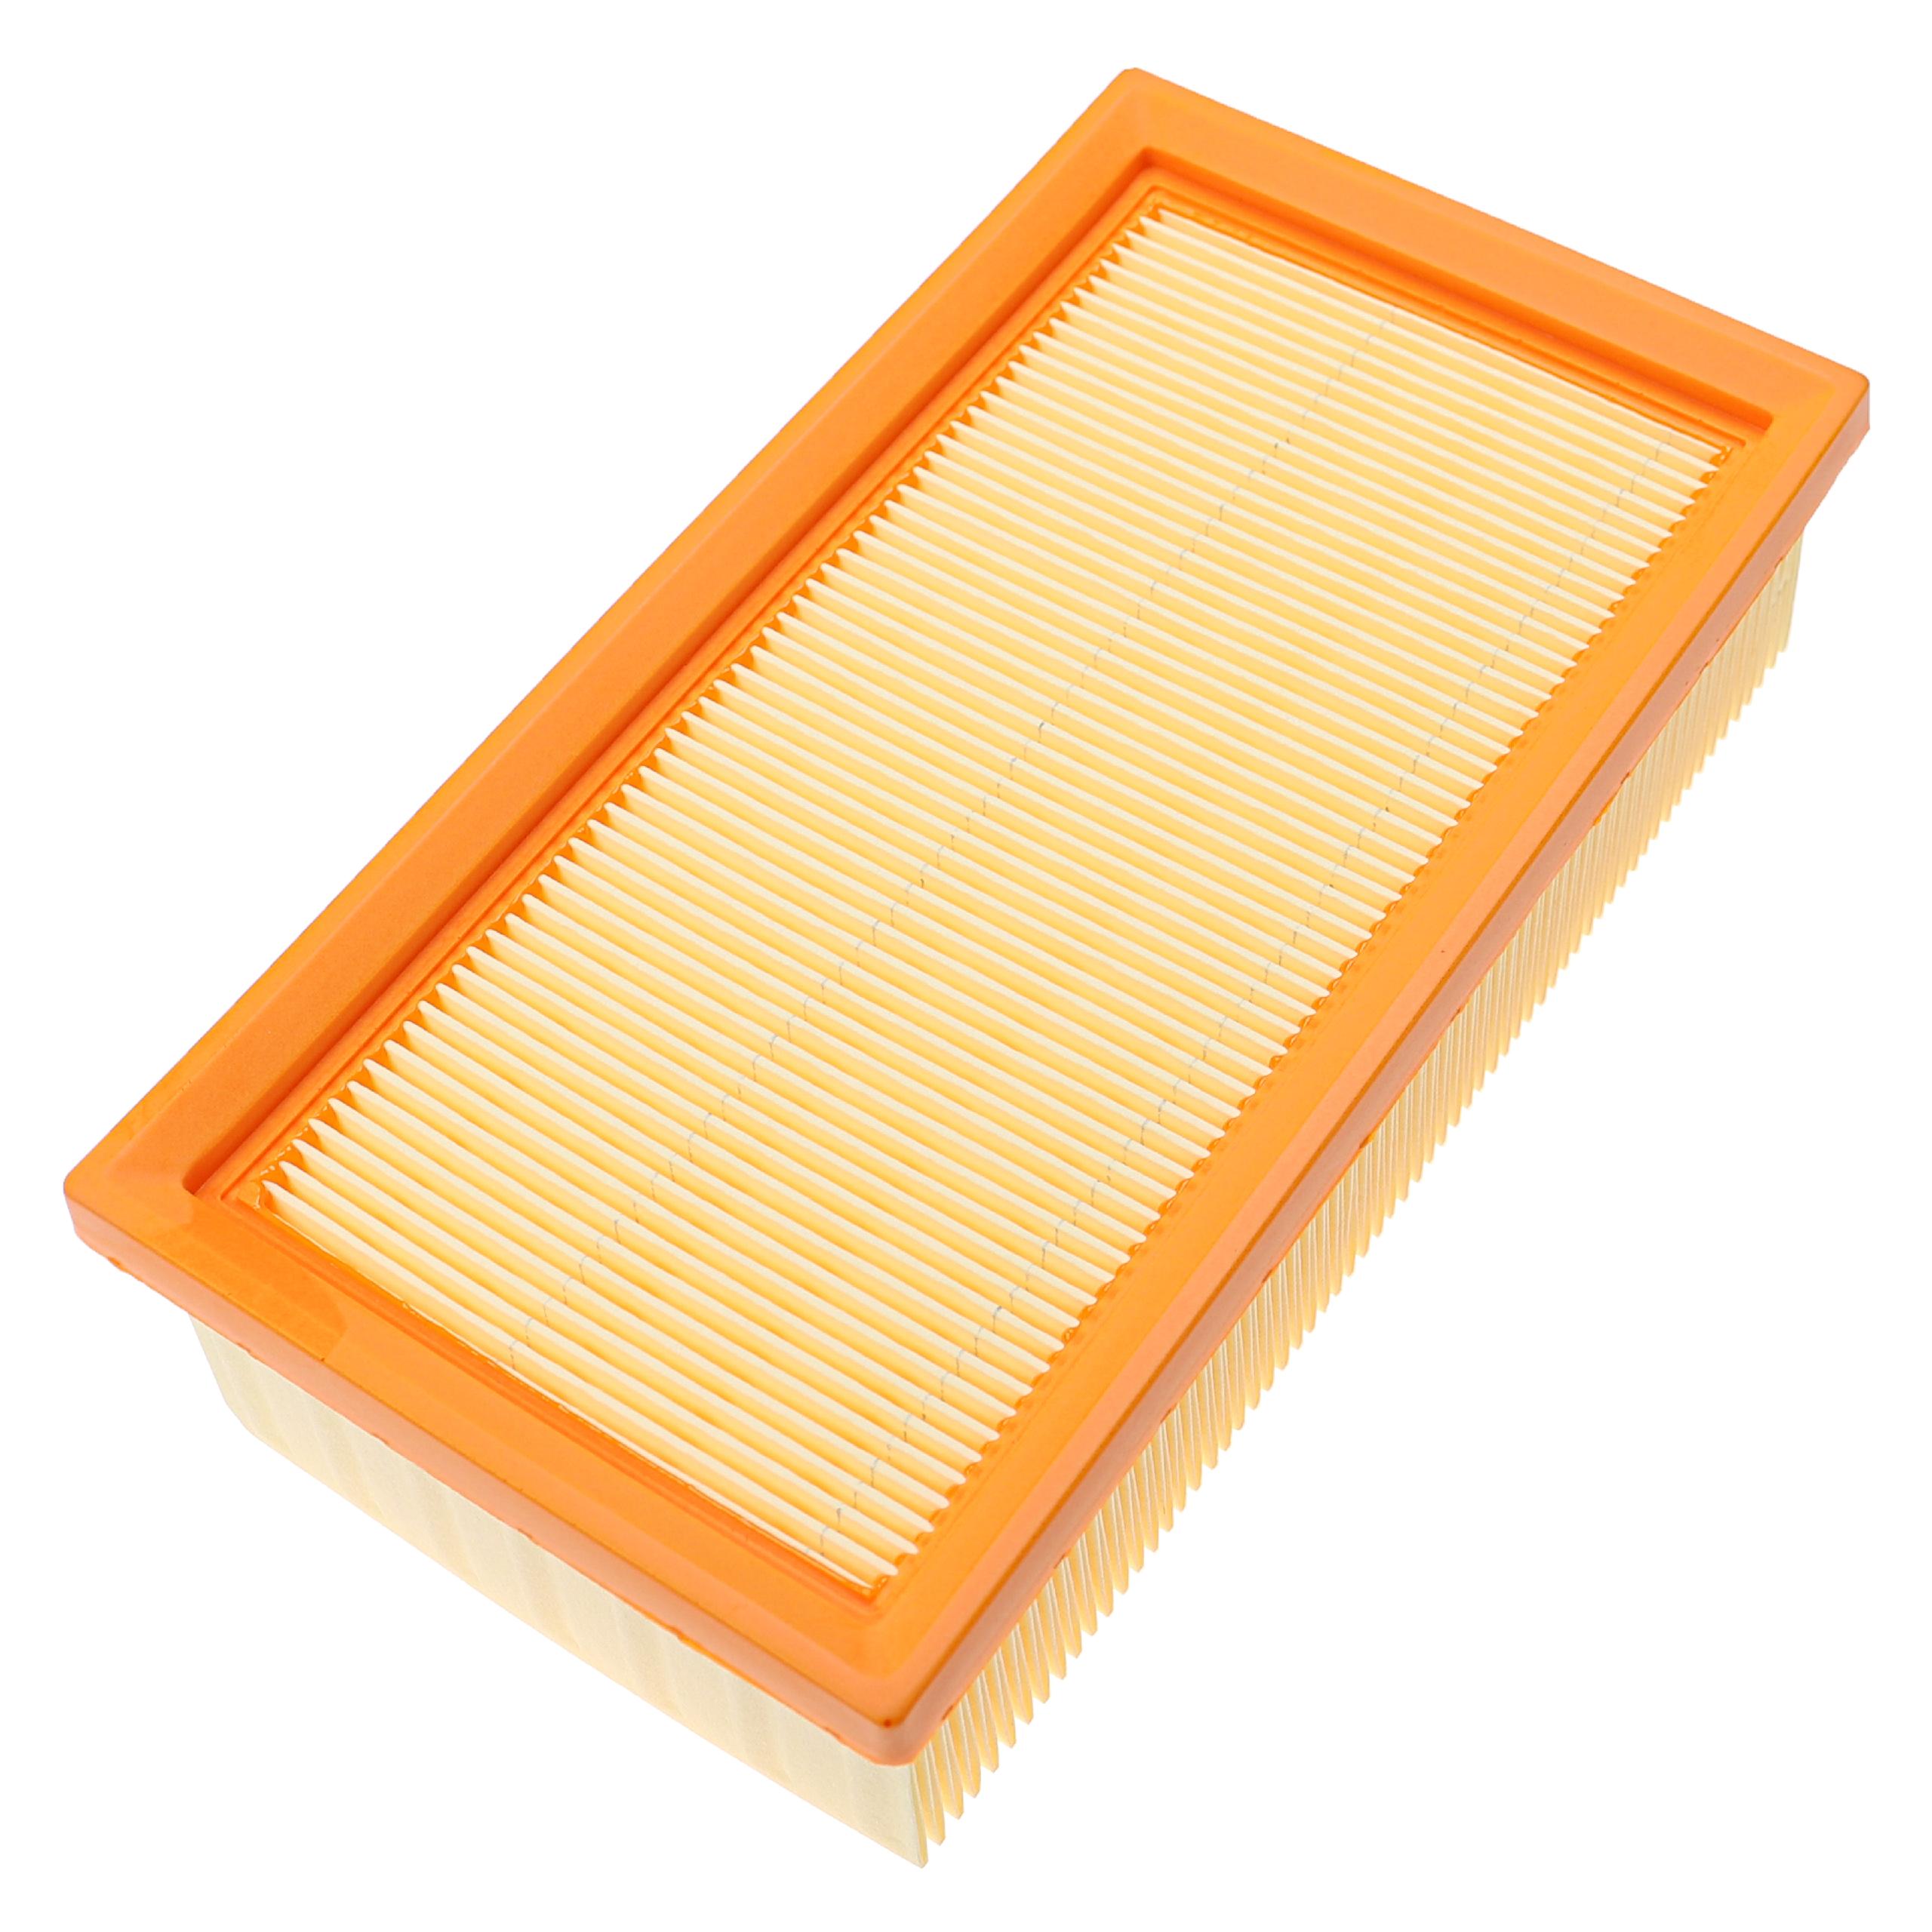 1x flat pleated filter replaces Festool 452065 for FestoolVacuum Cleaner